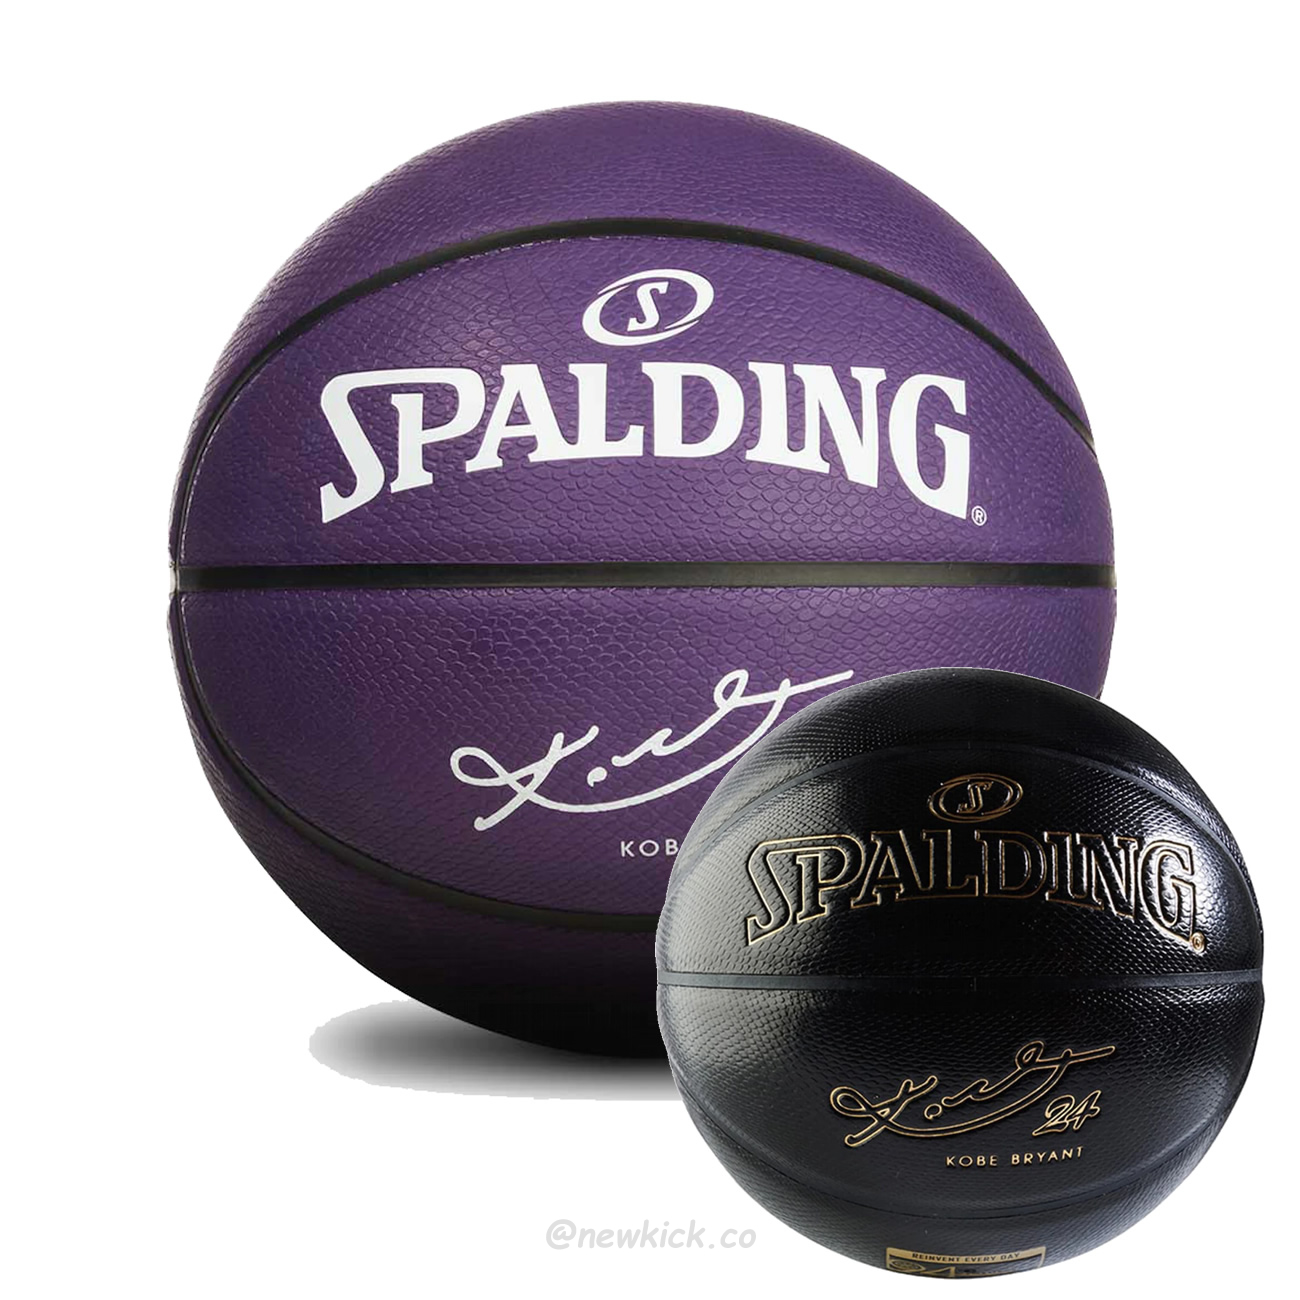 Spalding Kobe Bryant 24k Basketball Black Purple (1) - newkick.org